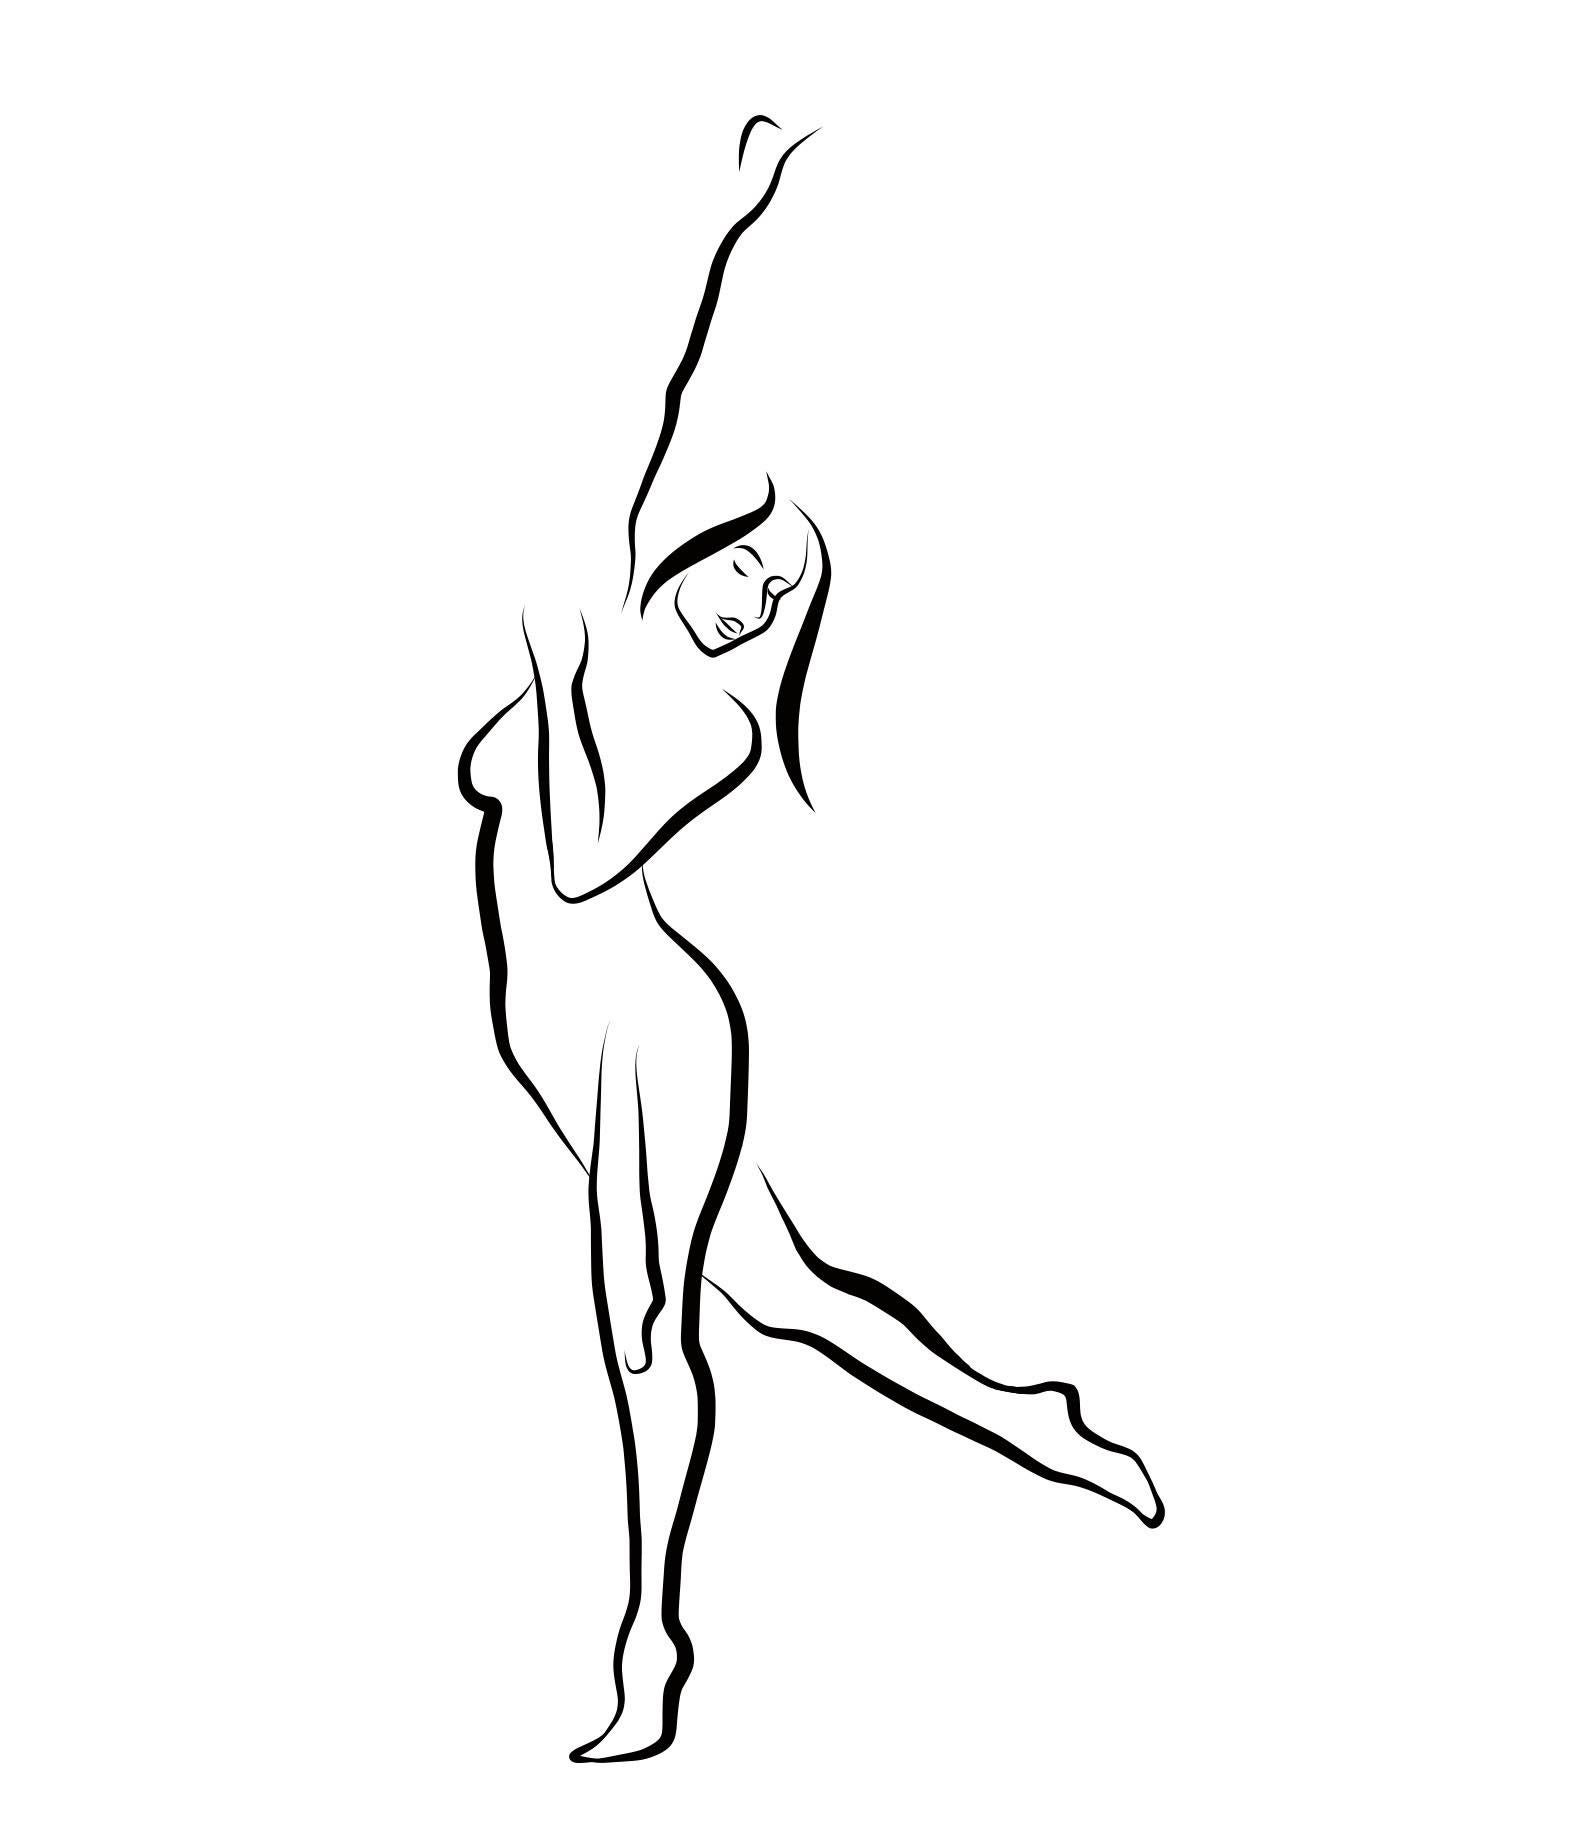 Haiku #24 - Digital Vector Drawing Dancing Female Nude Woman Figure Arm Raised